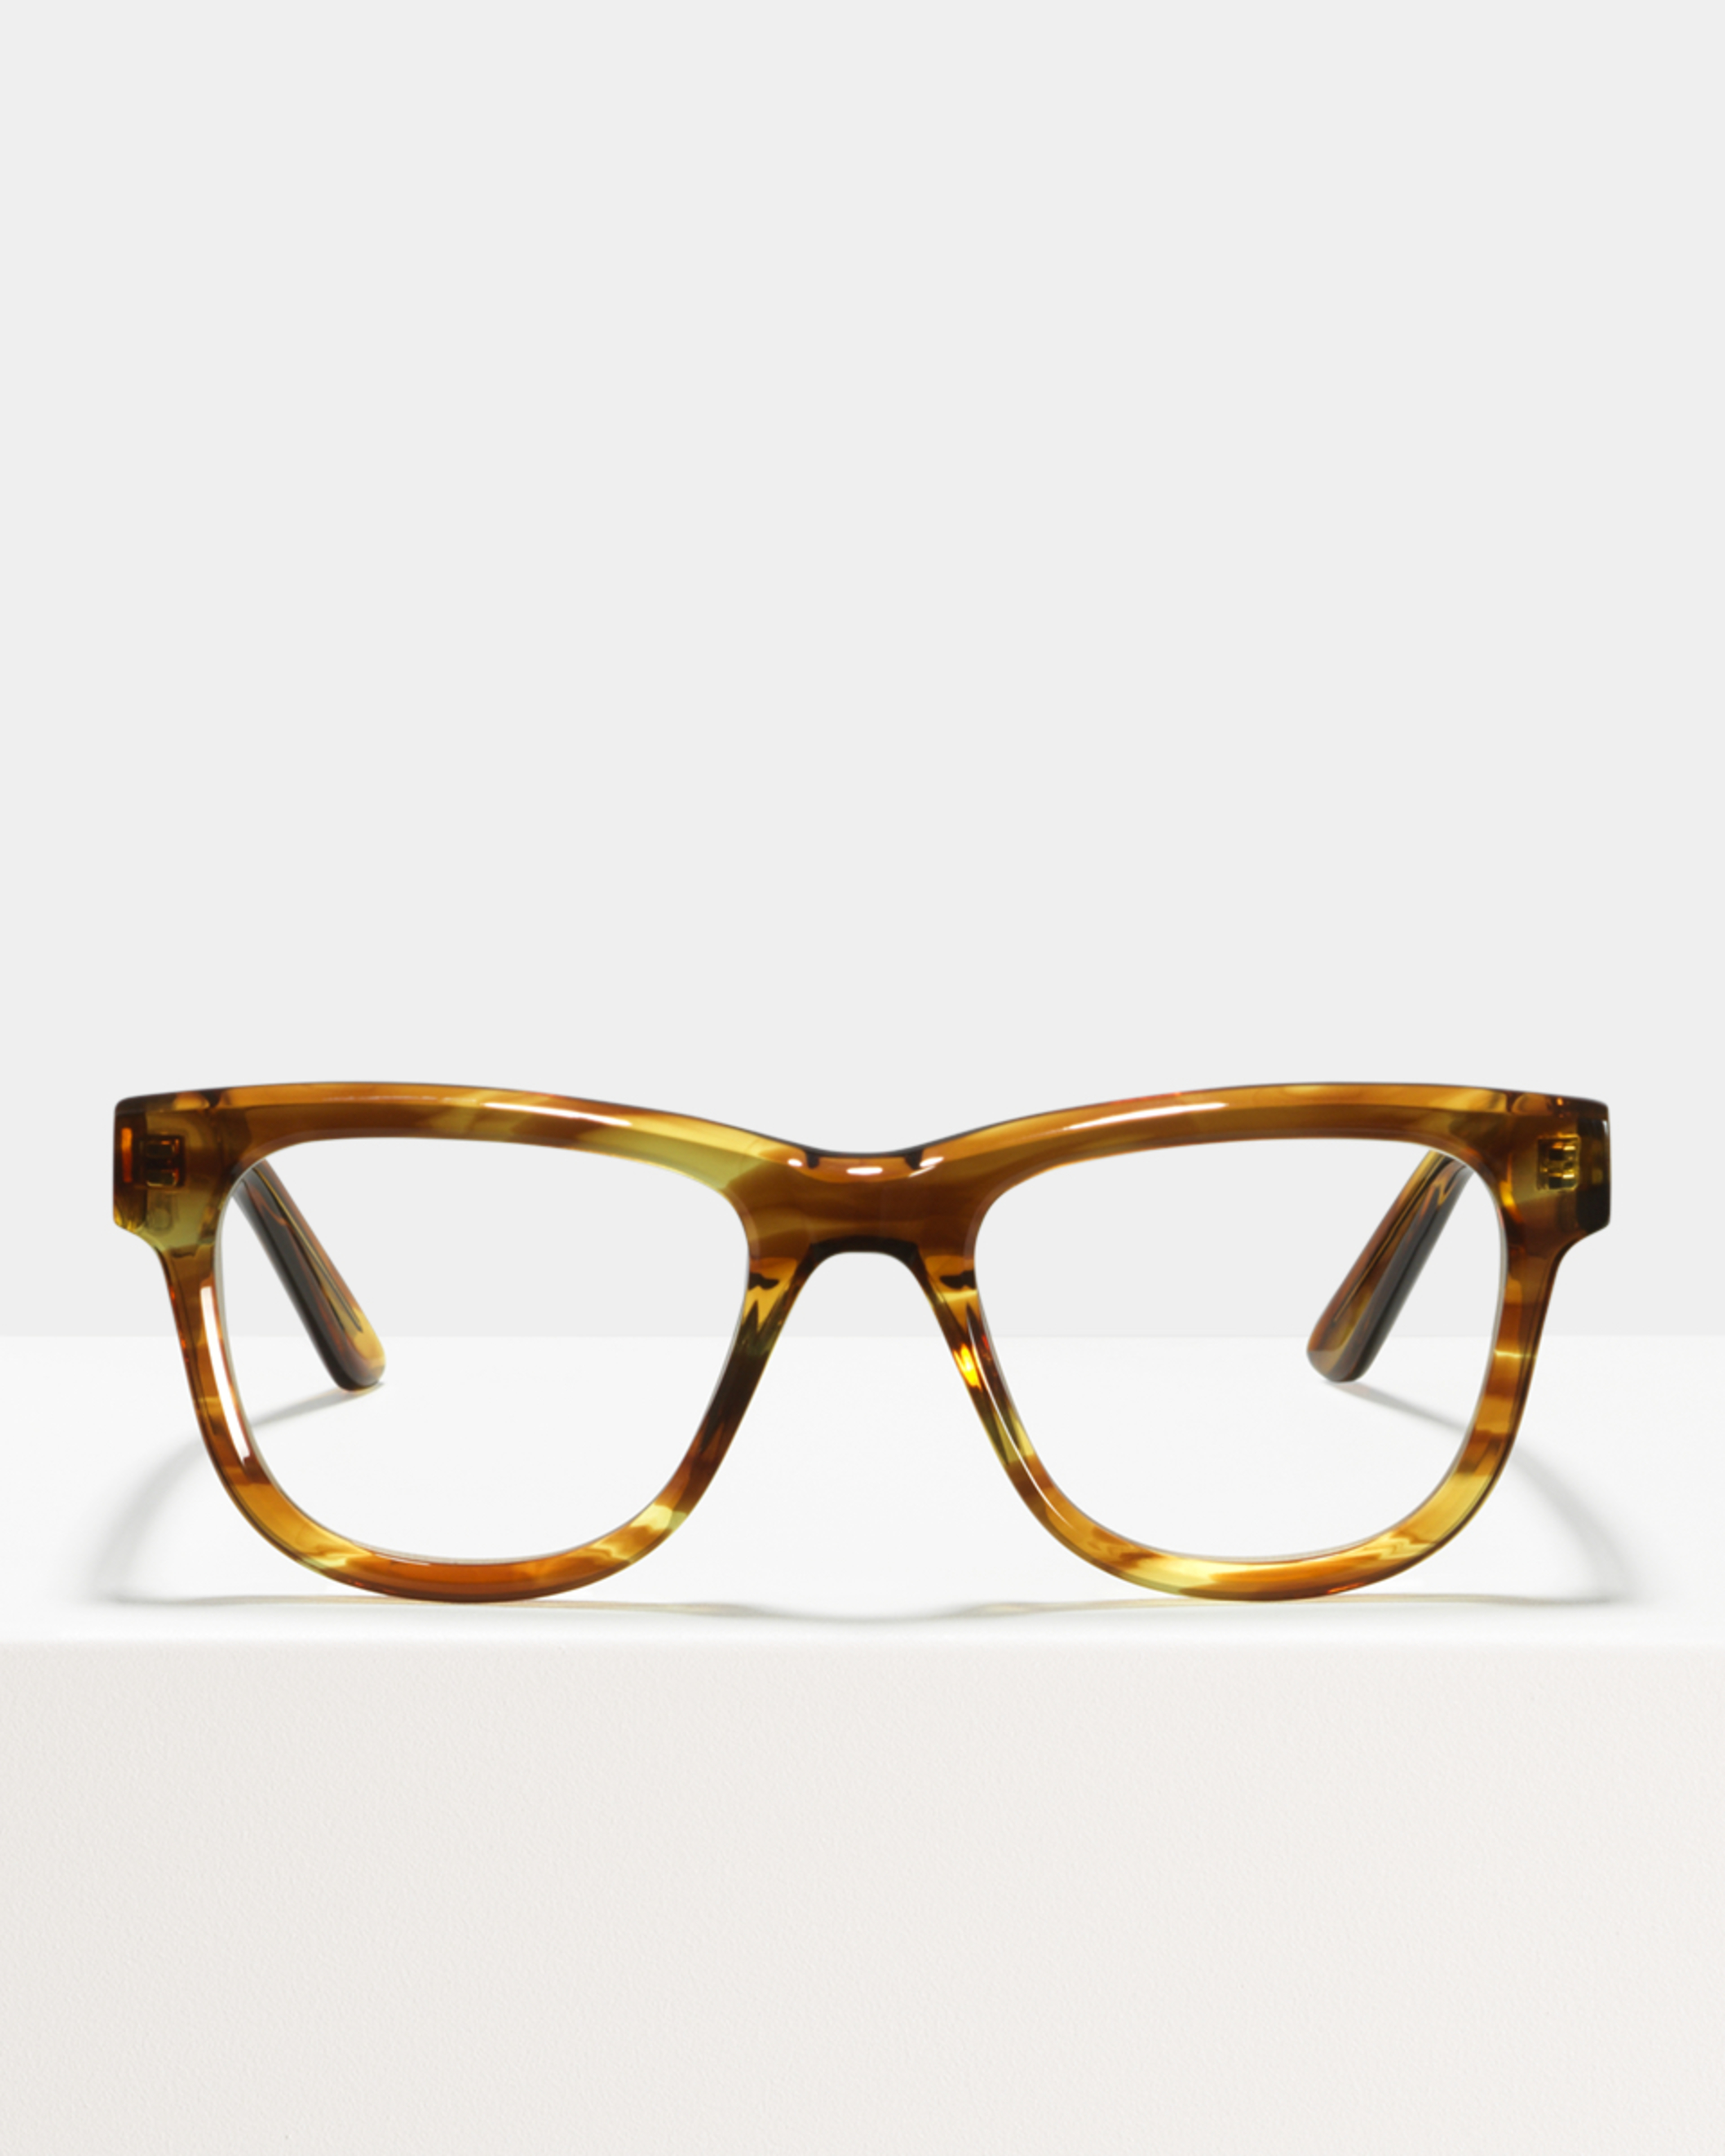 Ace & Tate Glasses | rechteckig Acetat in Braun, Orange